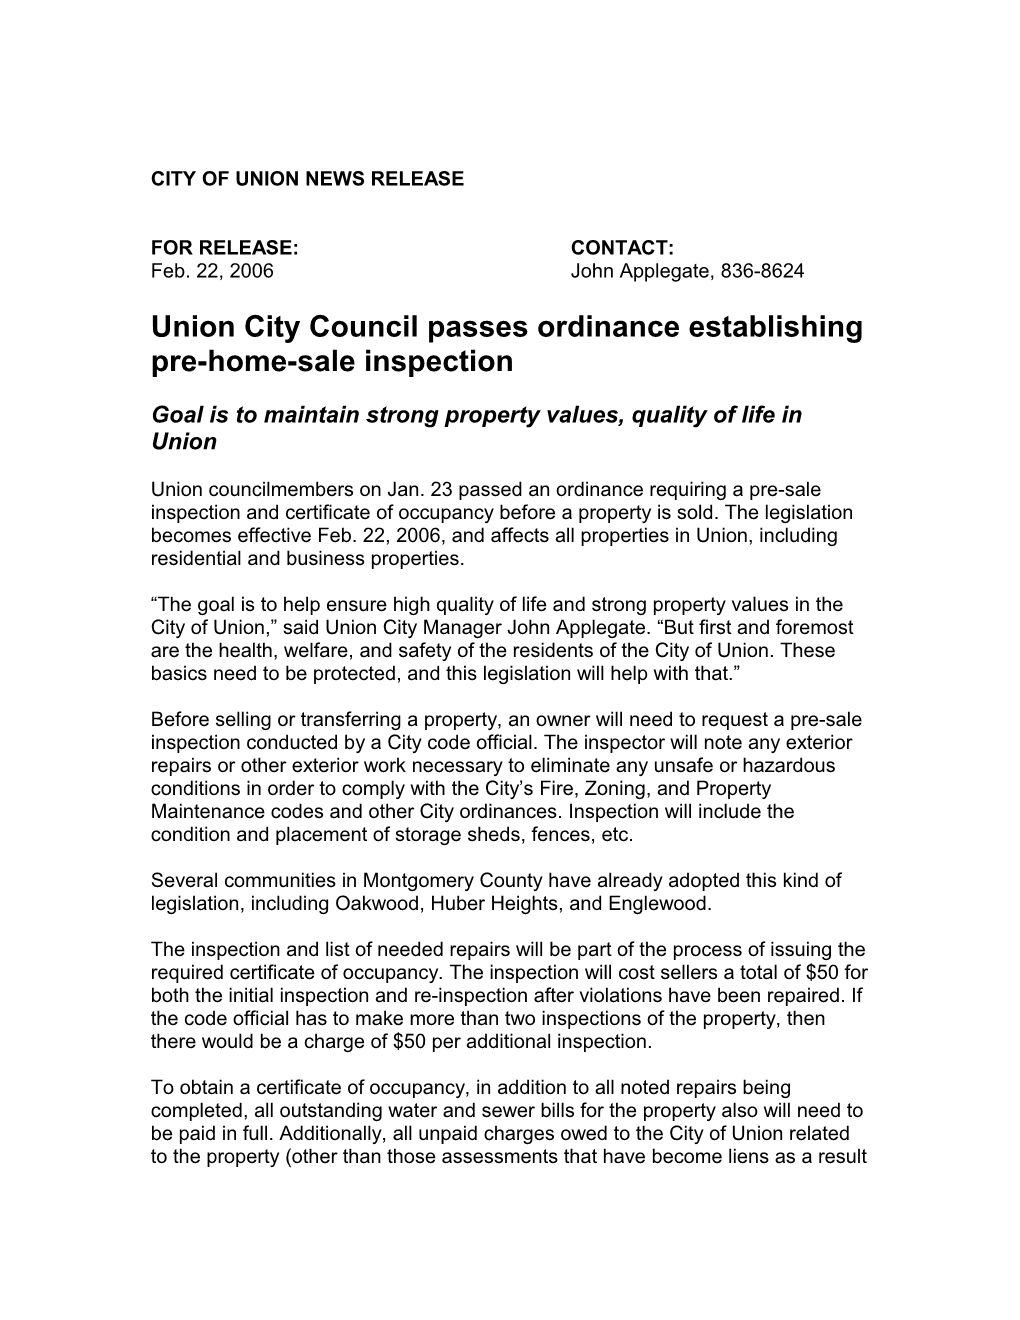 Union City Council Passes Ordinance Establishing